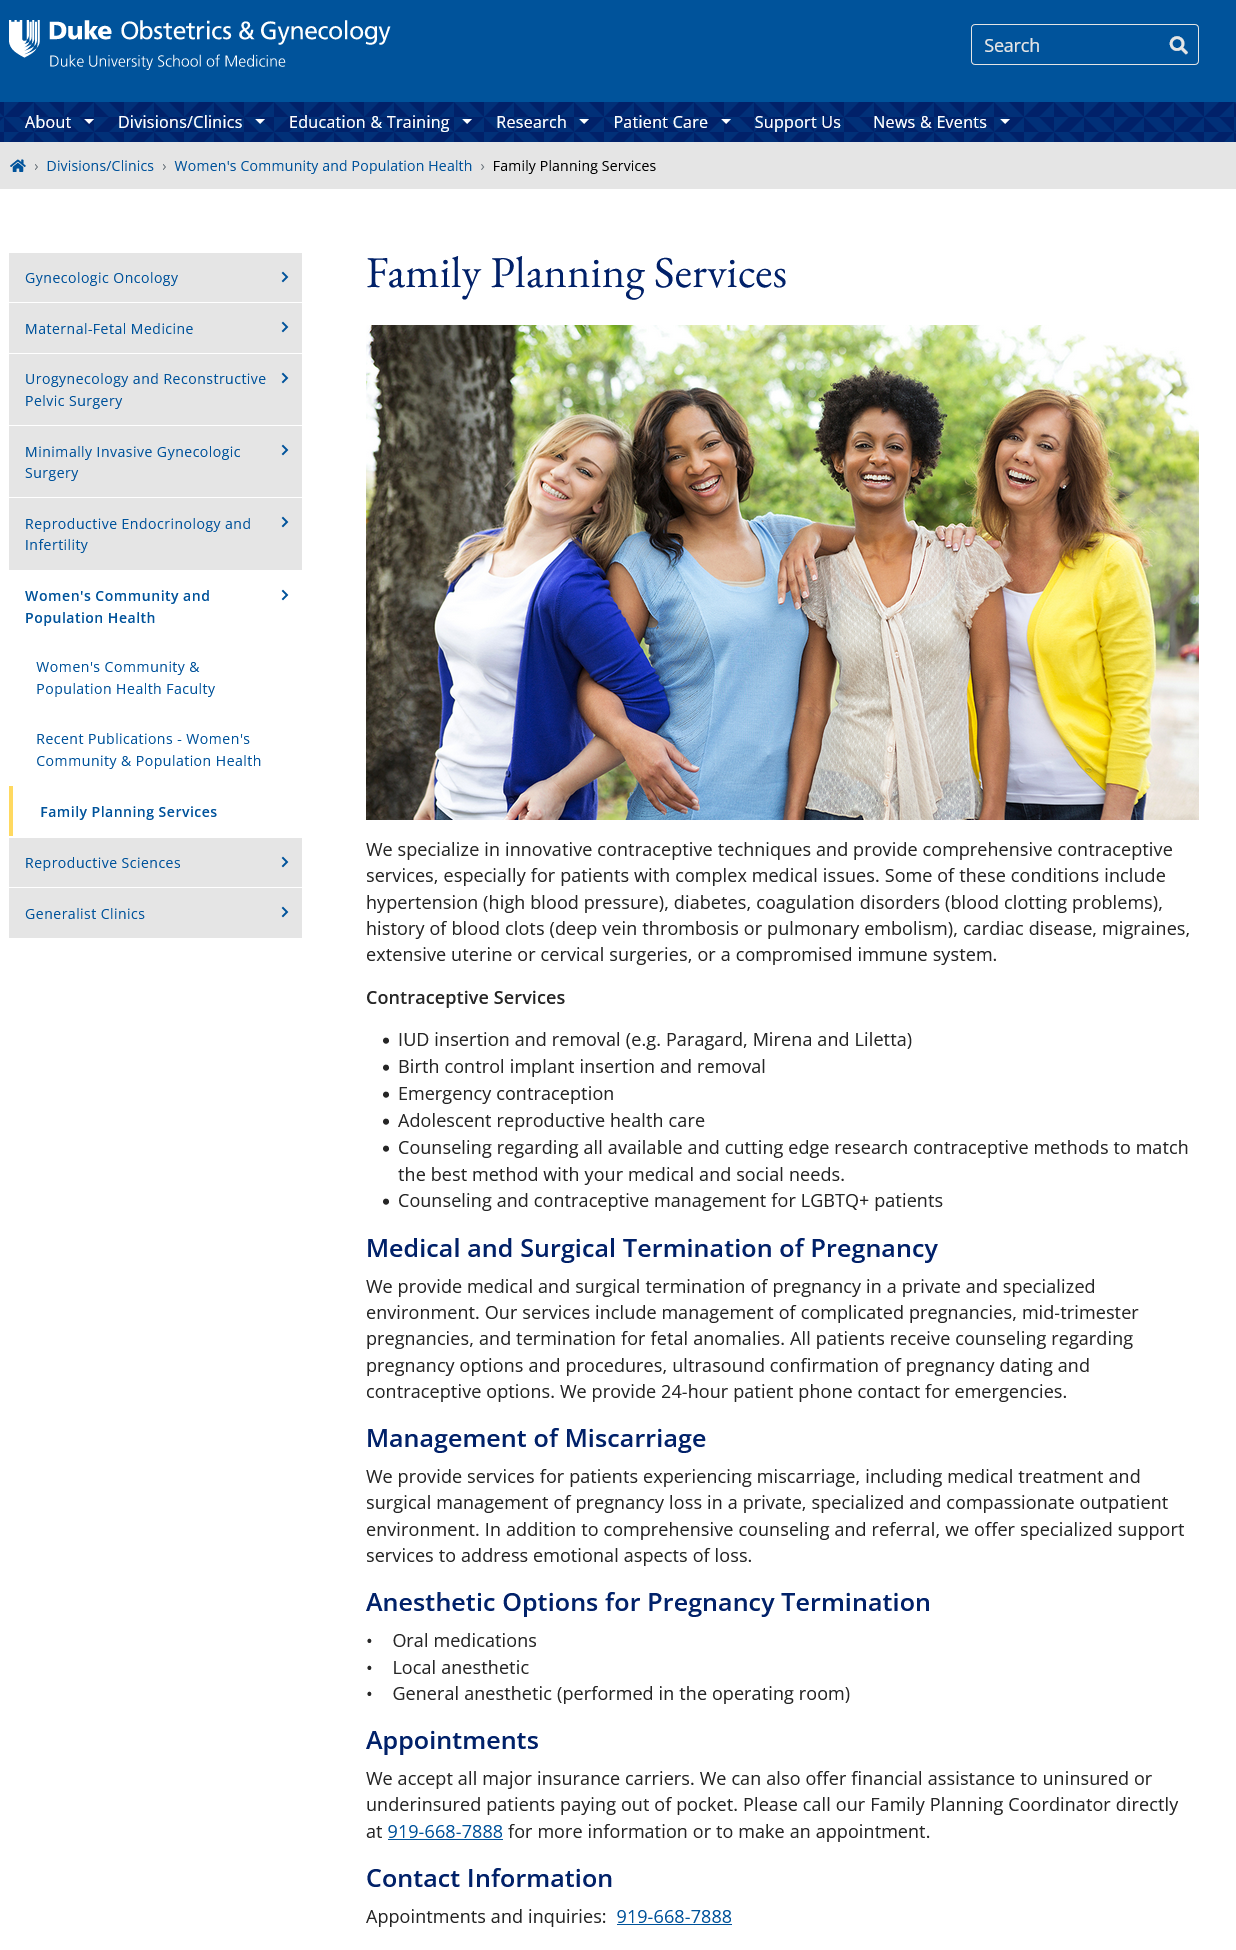 Duke University OBGYN Webpage Screenshot including abortion references